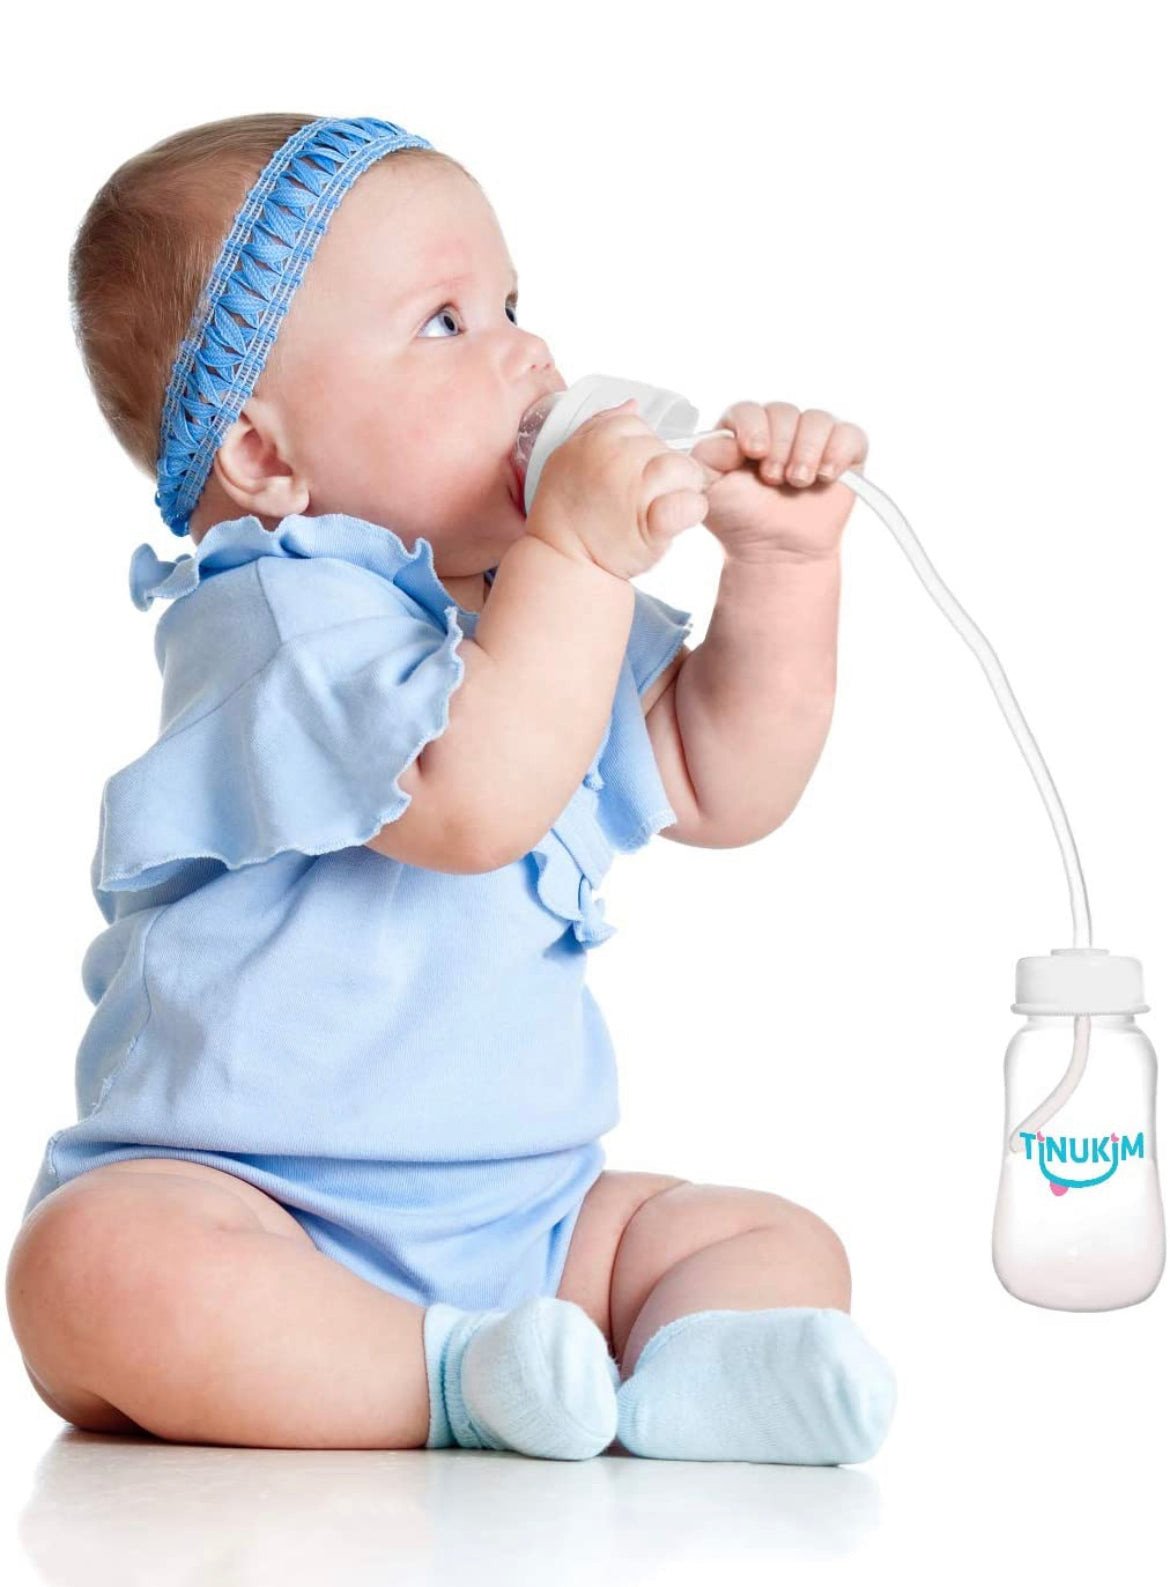 Tinukim iFeed 9 Ounce Self Feeding Baby Bottle with Tube - Handless Anti-Colic Nursing System, White - 2-Pack.